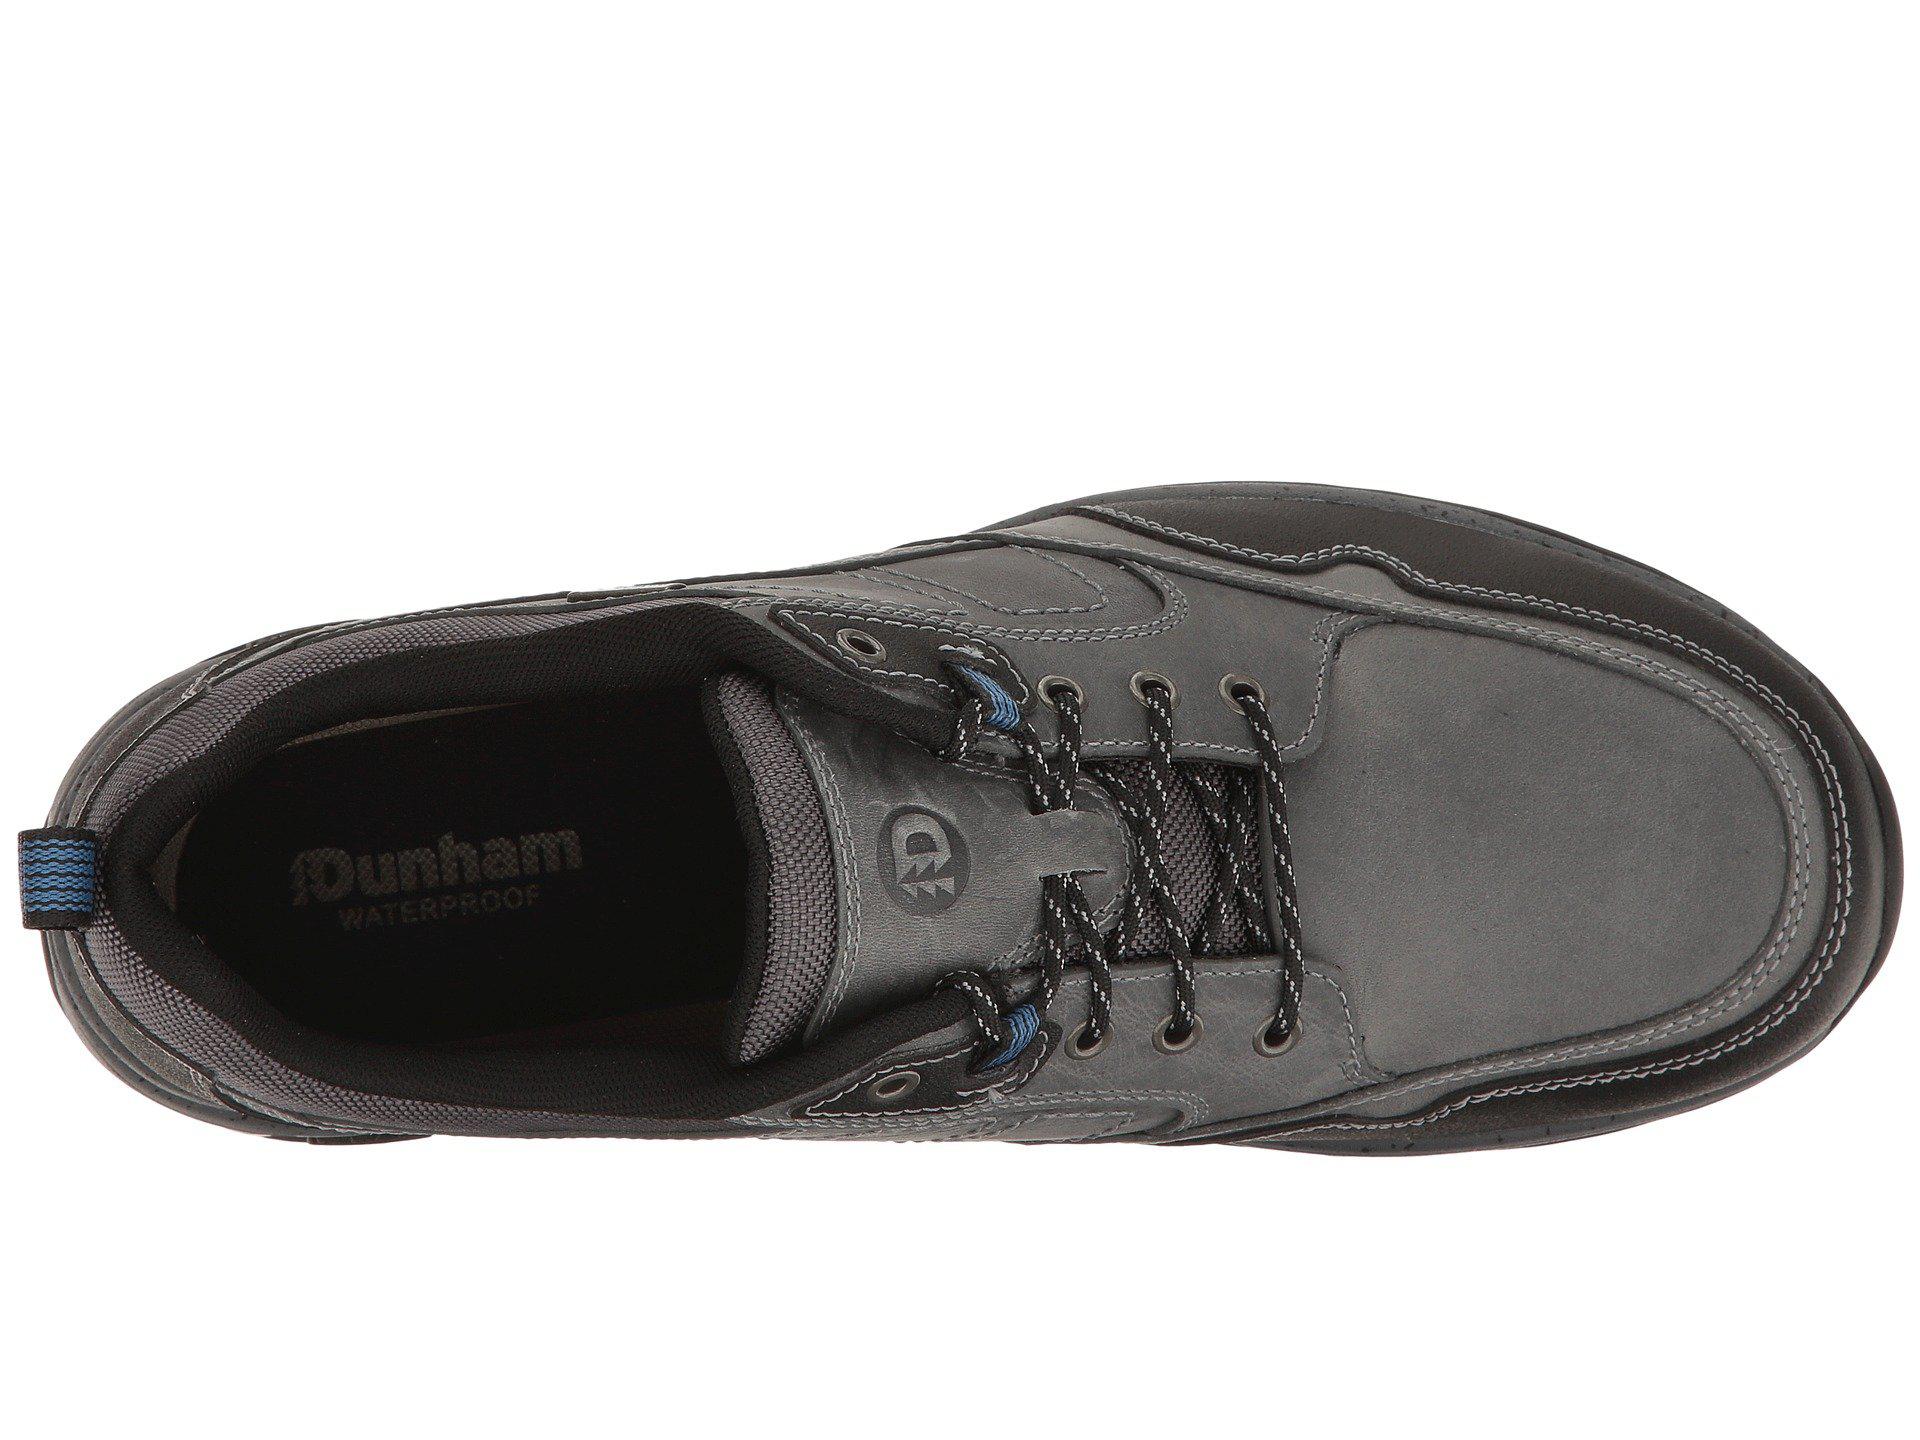 Dunham Mens Trukka Mudguard Fashion Sneaker